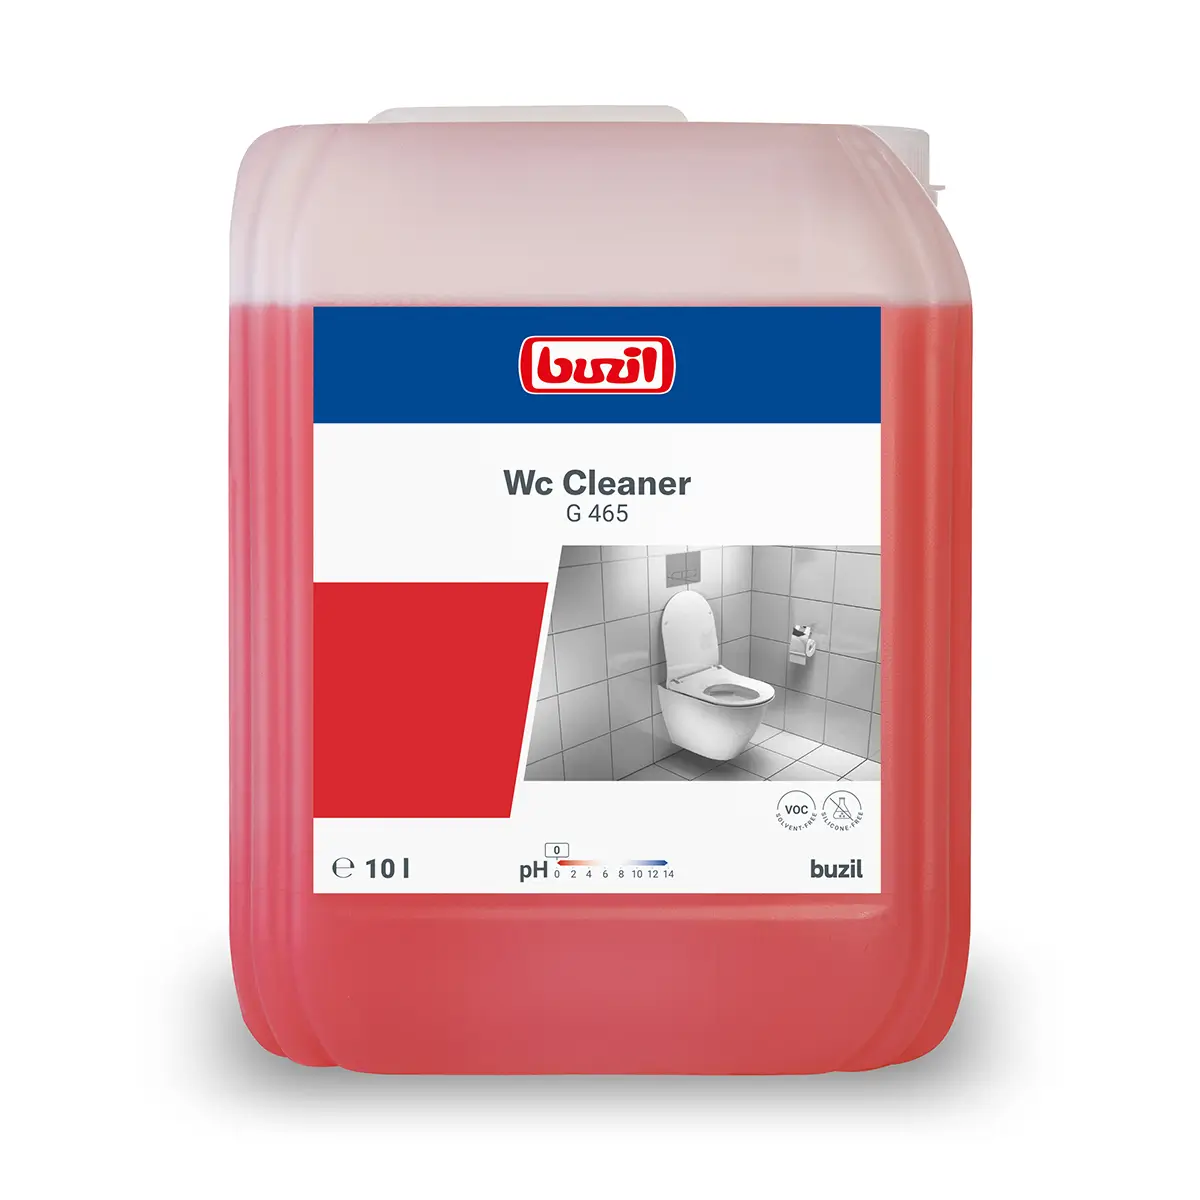 Buzil WC Cleaner G465 Sanitärgrundreiniger 10l